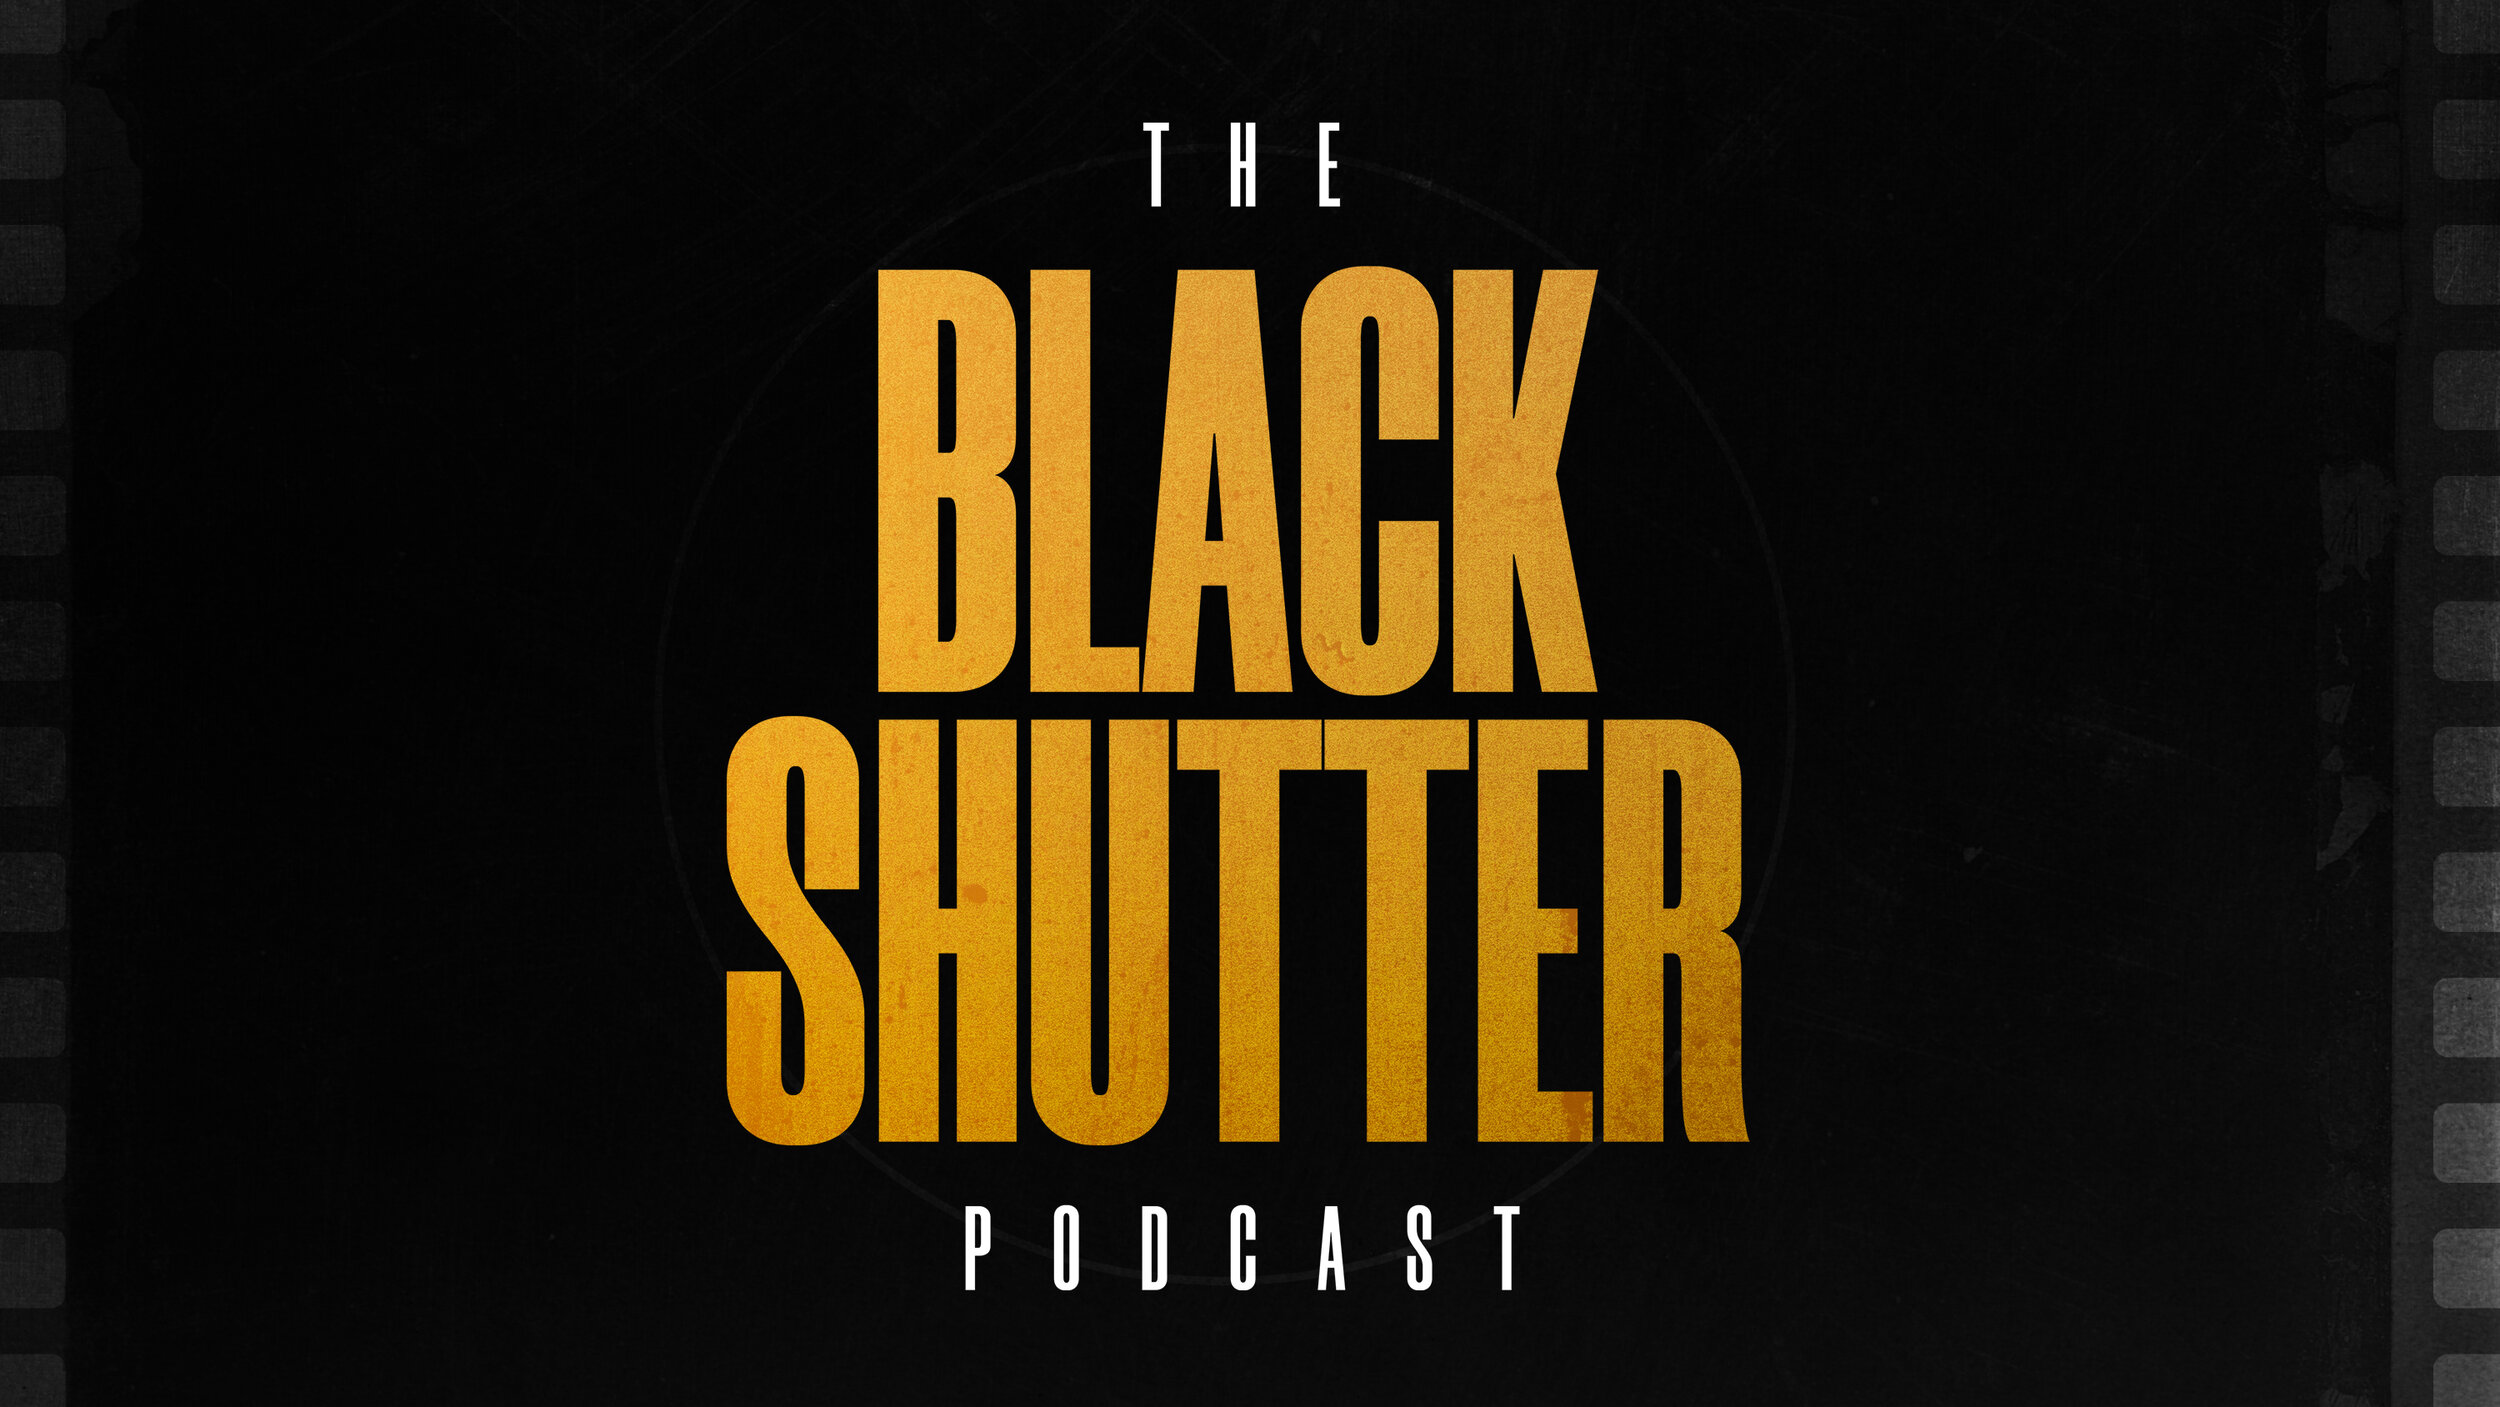 Bridging the Gap - Francis Kokoroko — The Black Shutter Podcast